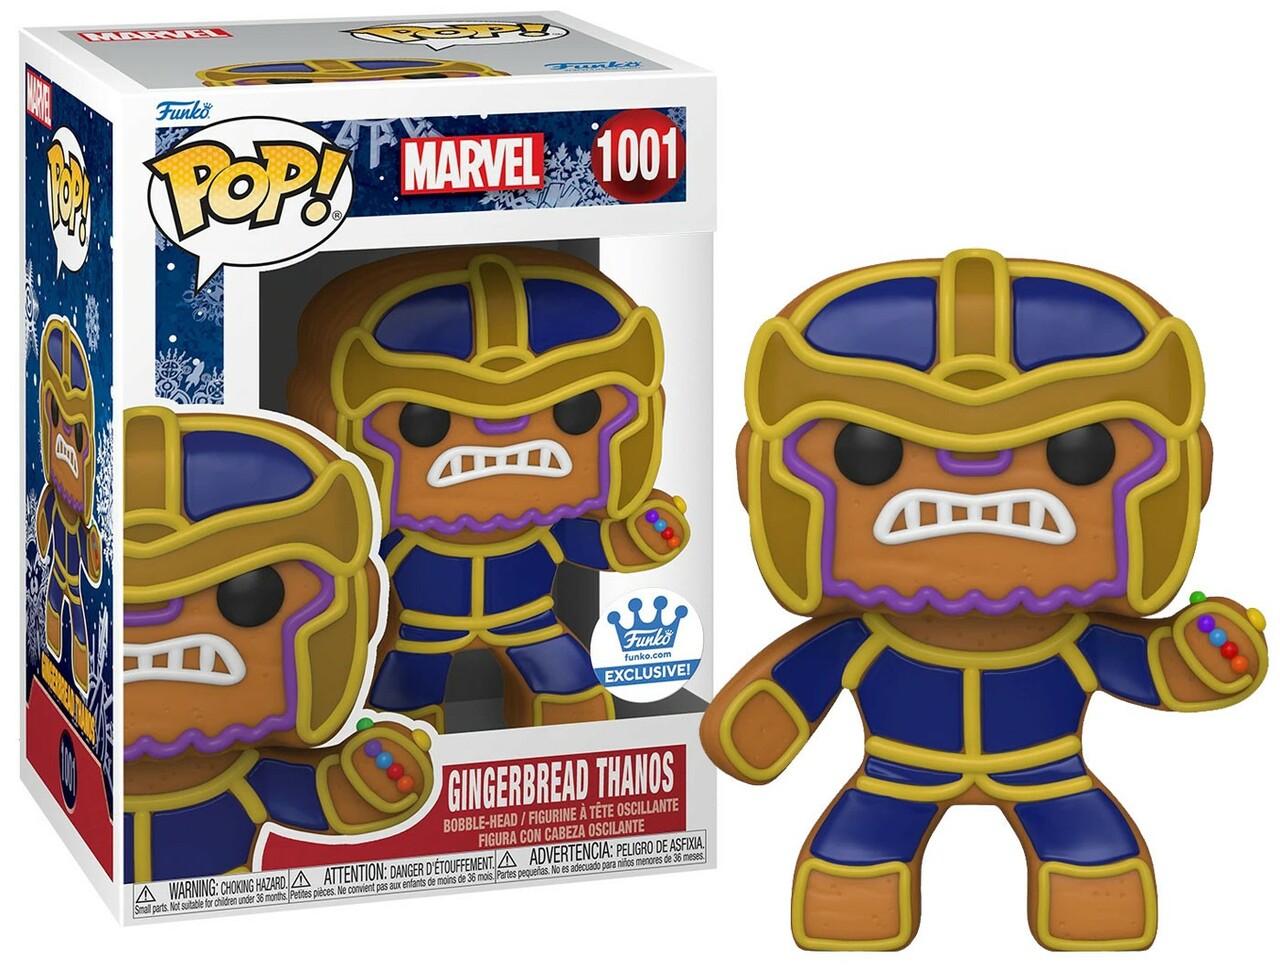 Gingerbread Thanos 951 (Funko Shop Ex.)(9/10 Condition)